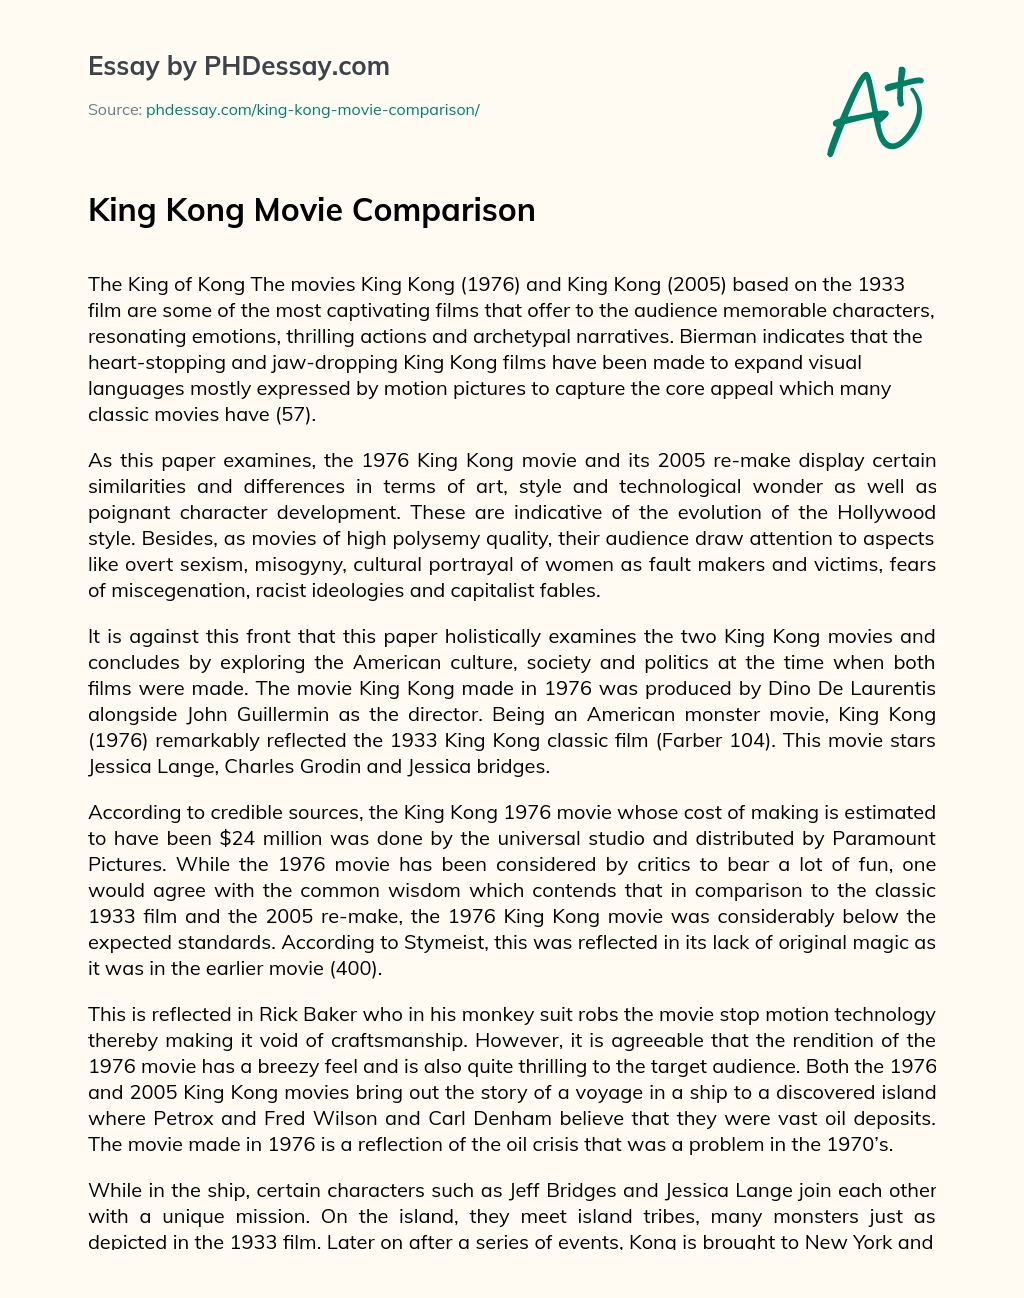 King Kong Movie Comparison essay